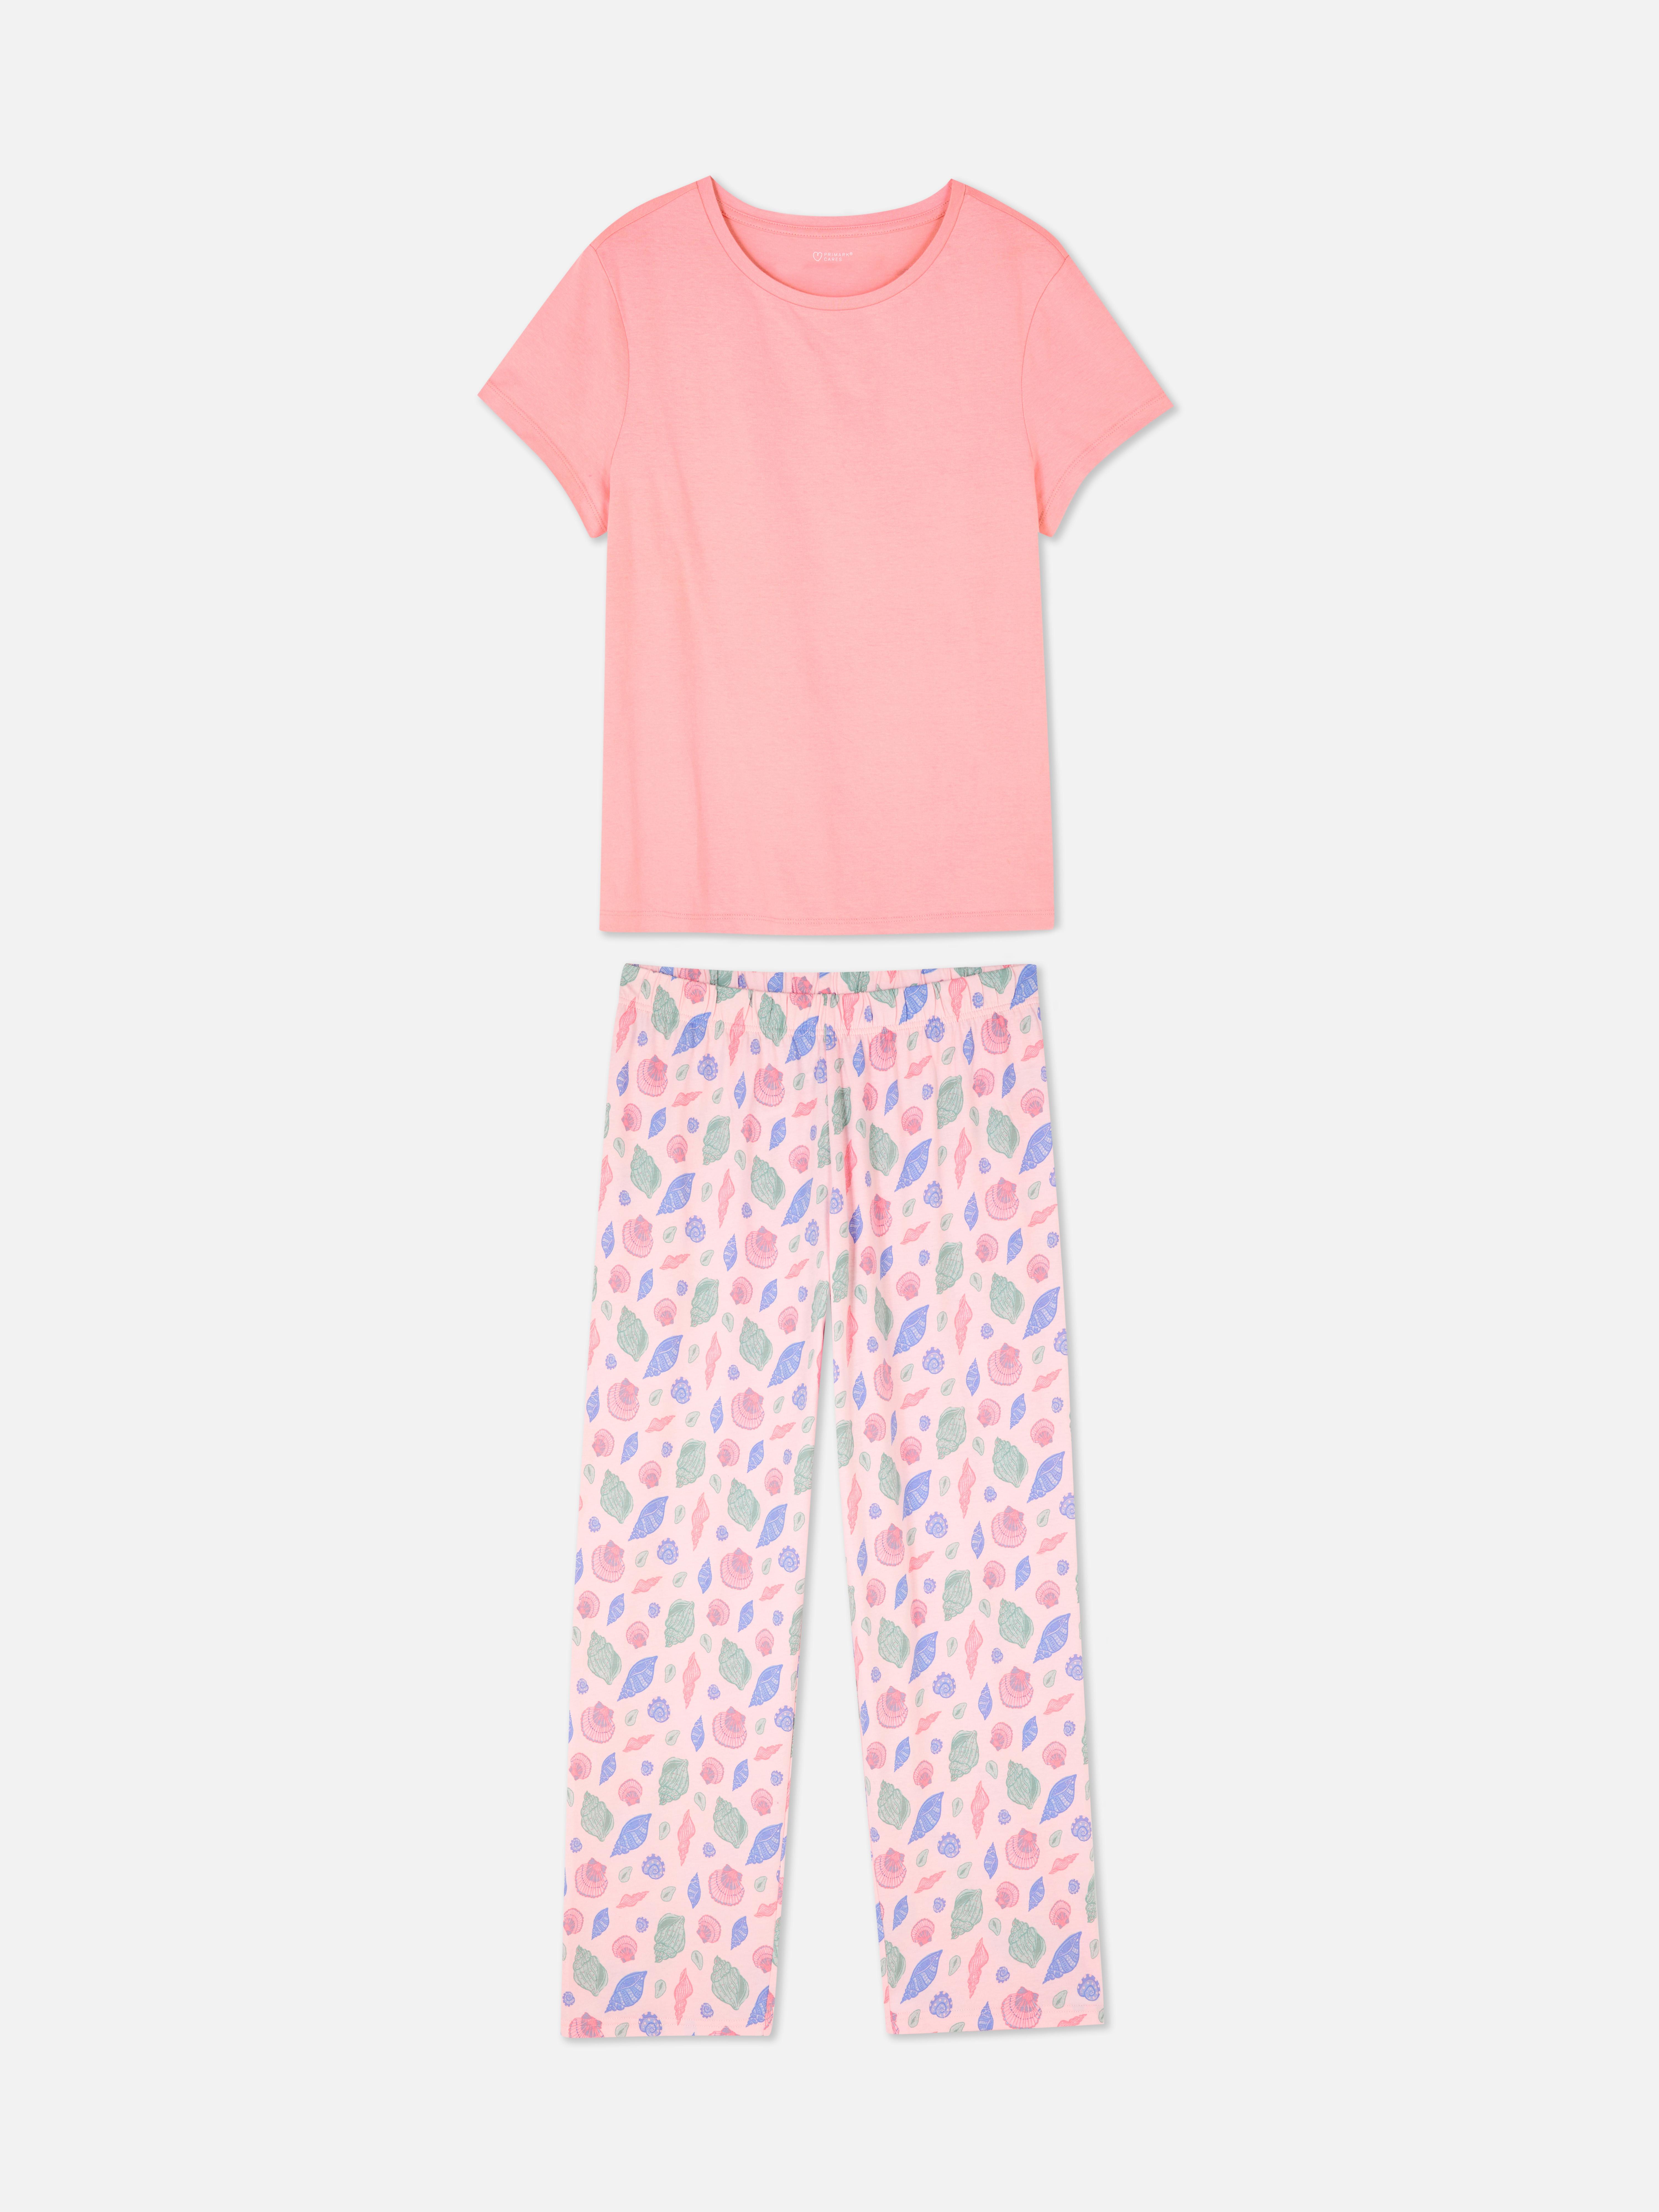 Patterned Short Sleeve Pyjamas